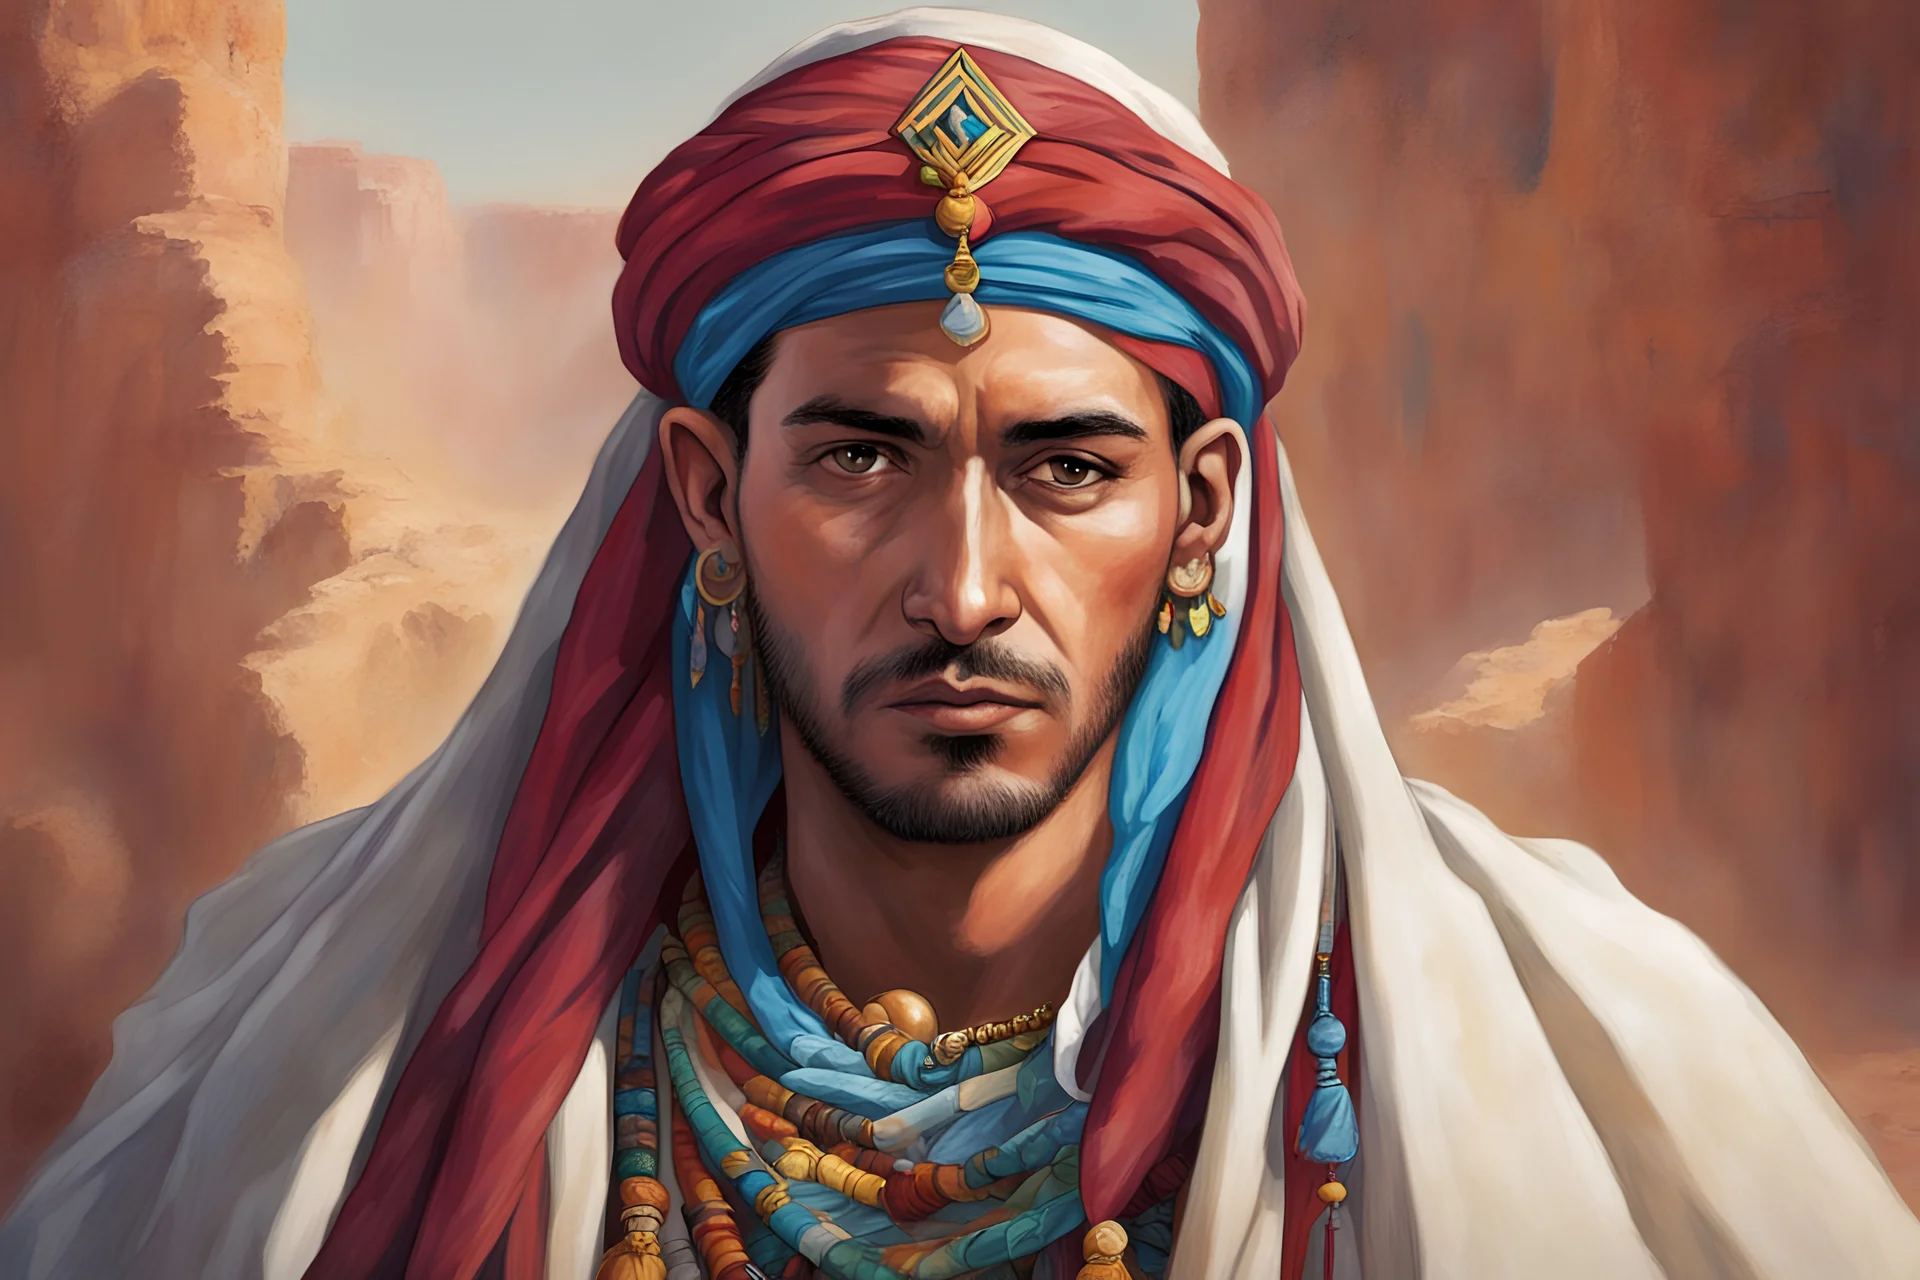 Dehya, the Amazigh leader, receives an upbringing worthy of a leader